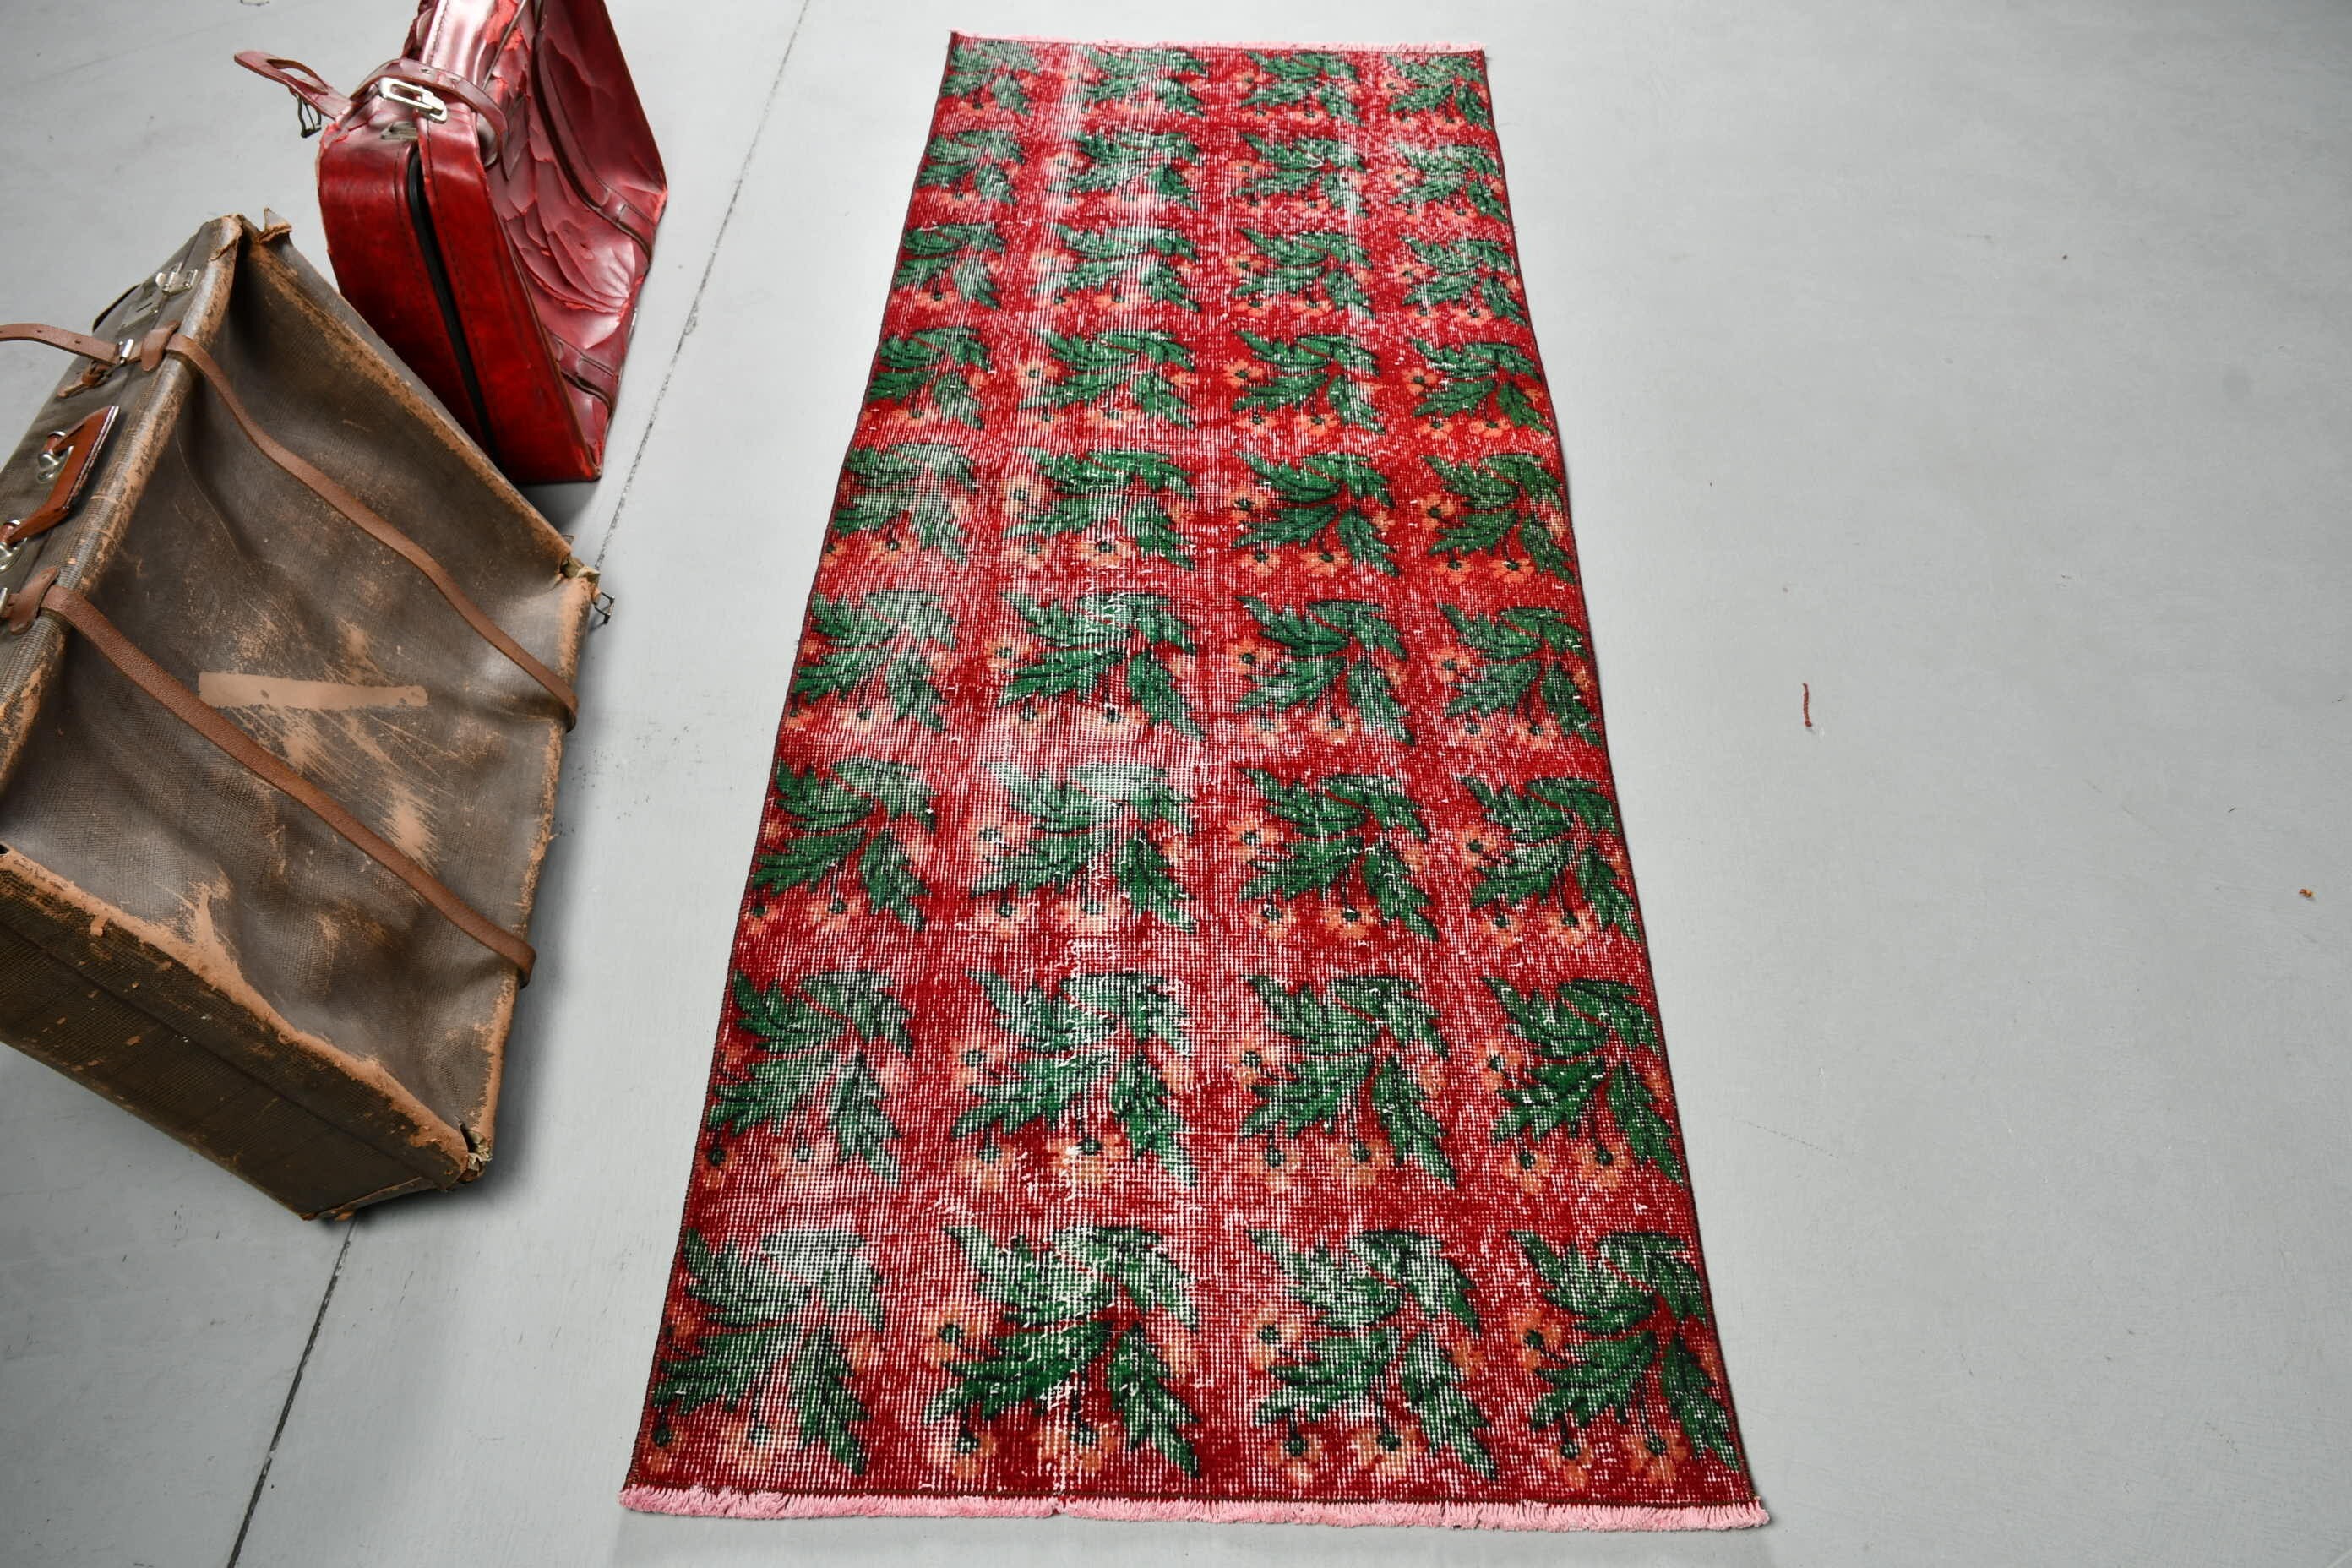 Rugs for Runner, Stair Rug, Turkish Rug, 2.6x7 ft Runner Rug, Vintage Rug, Art Rug, Home Decor Rug, Red Anatolian Rugs